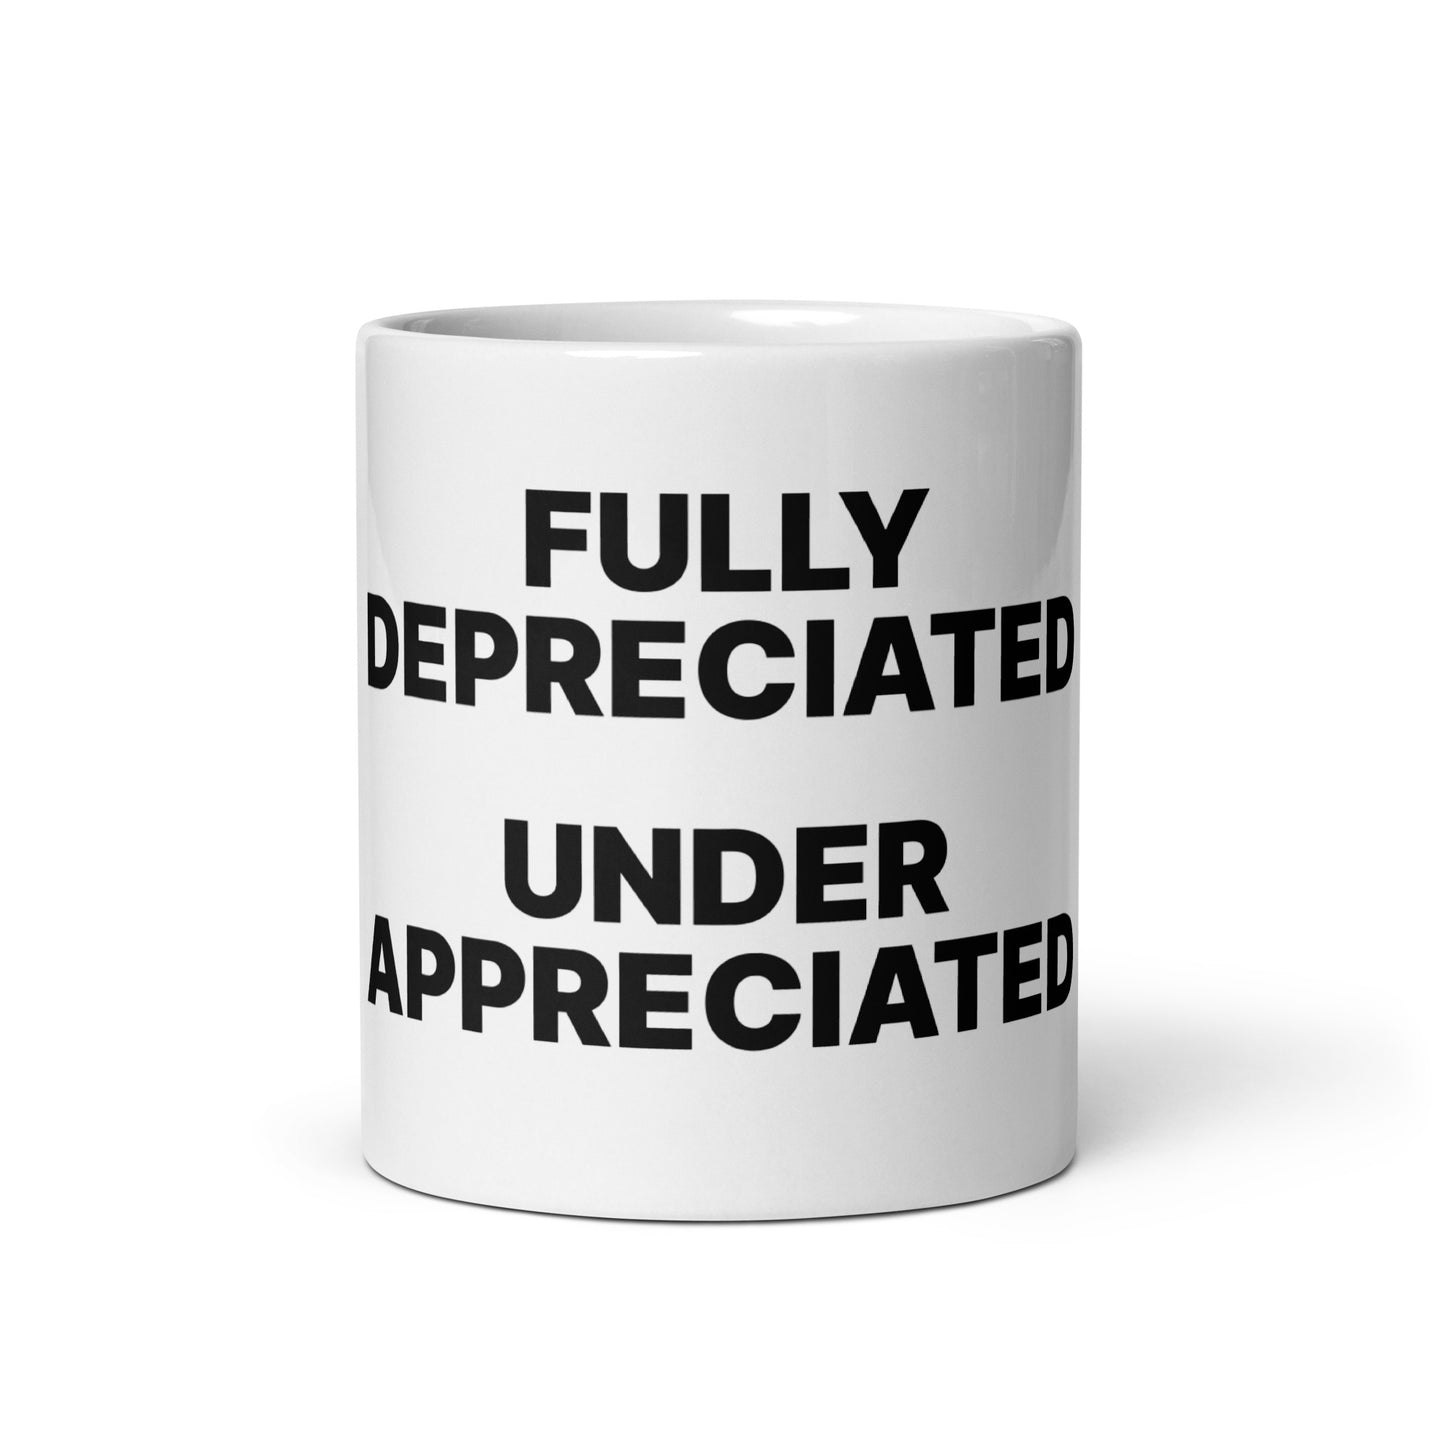 Fully Depreciated Under Appreciated mug